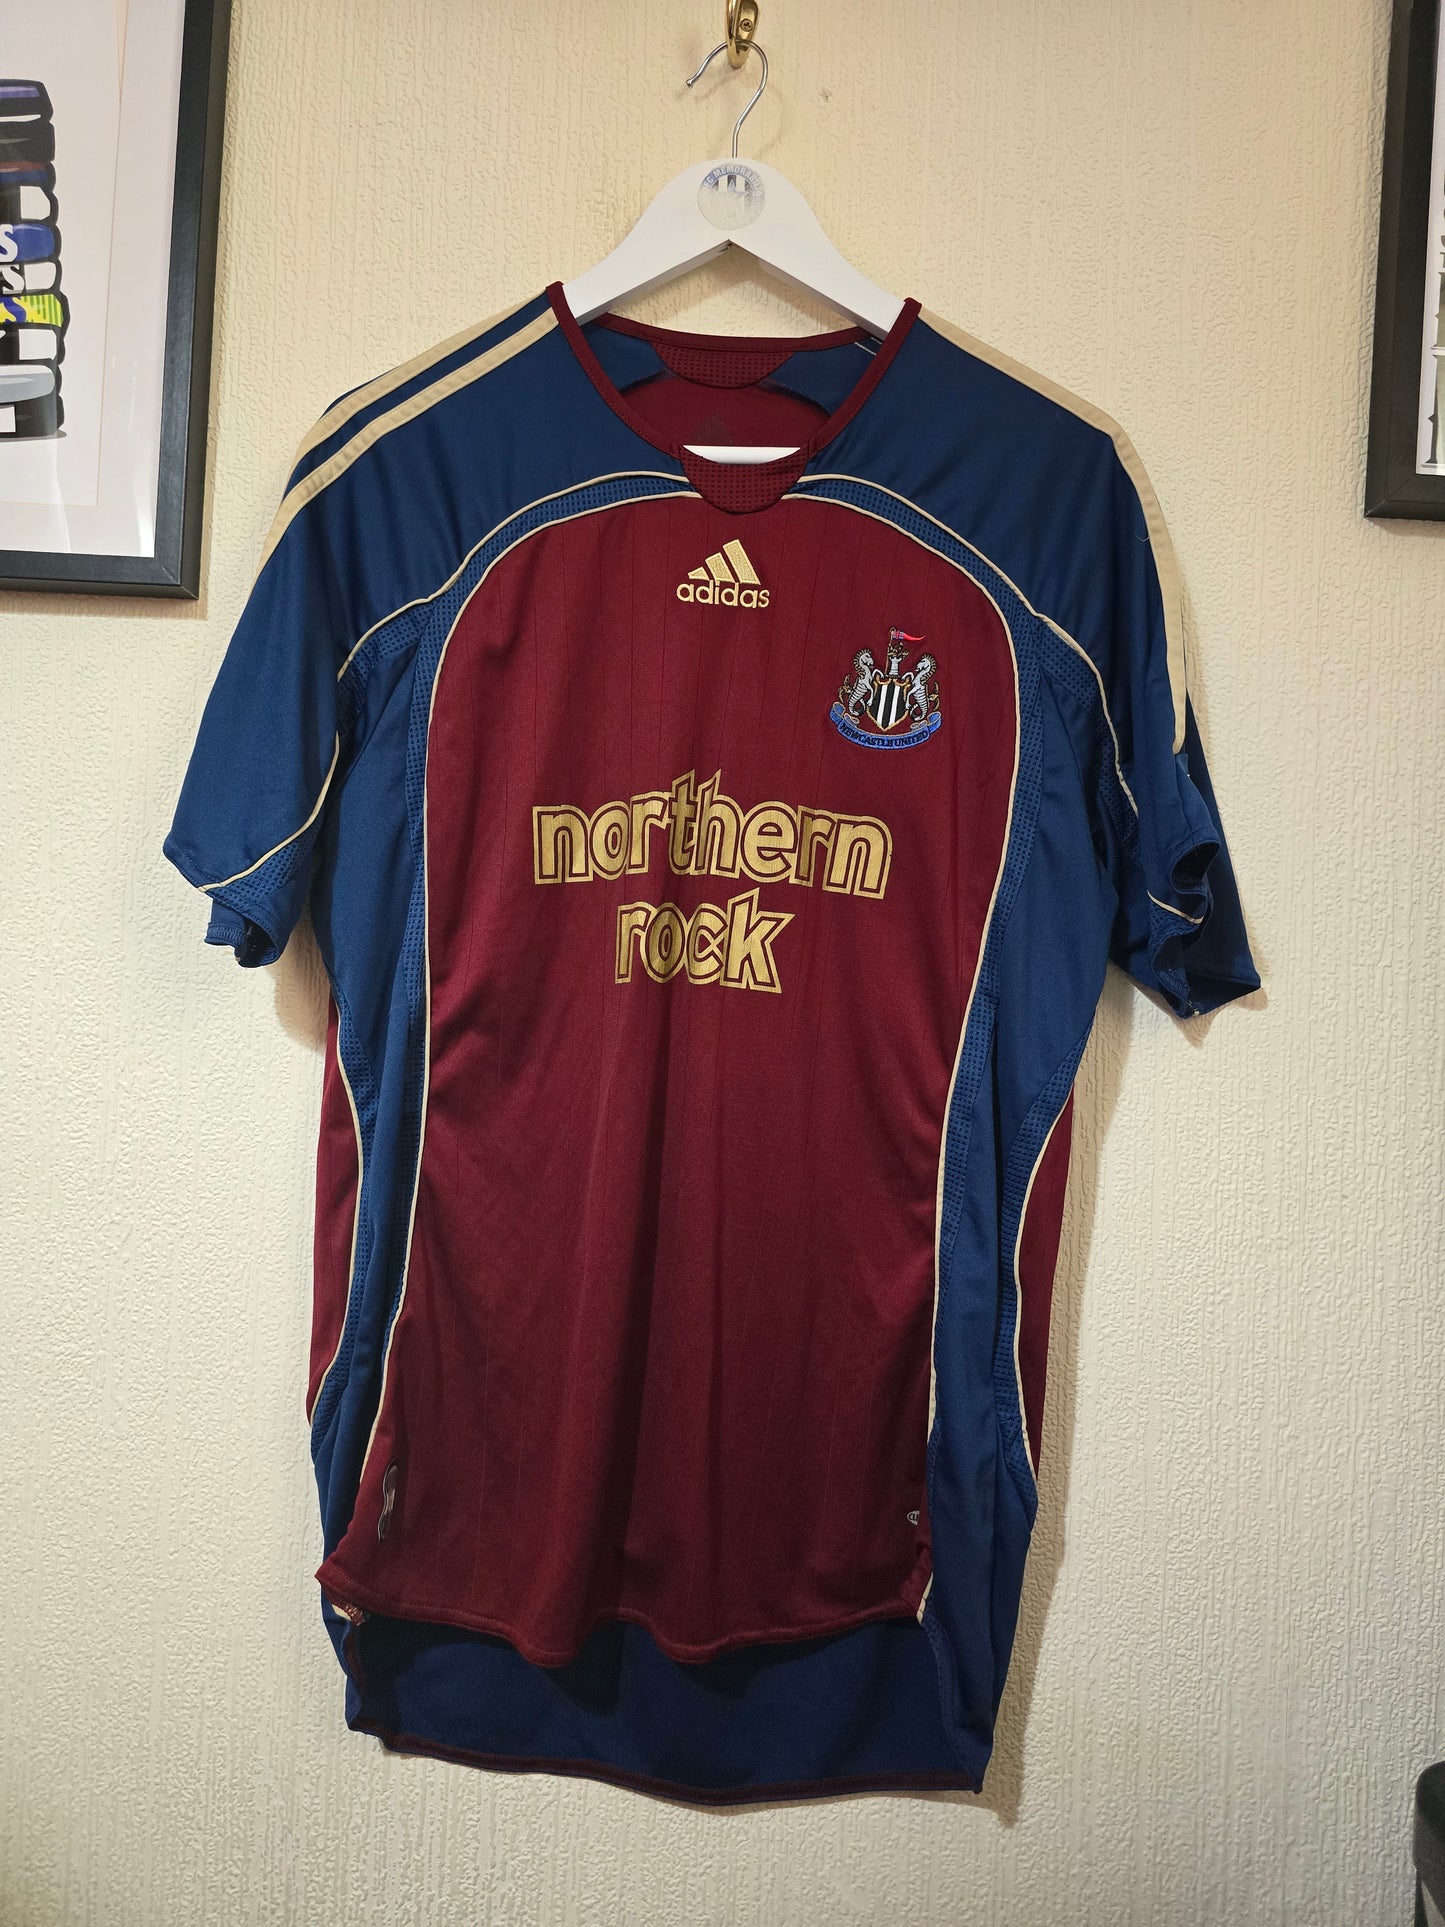 Newcastle United 2006/07 away shirt - Small